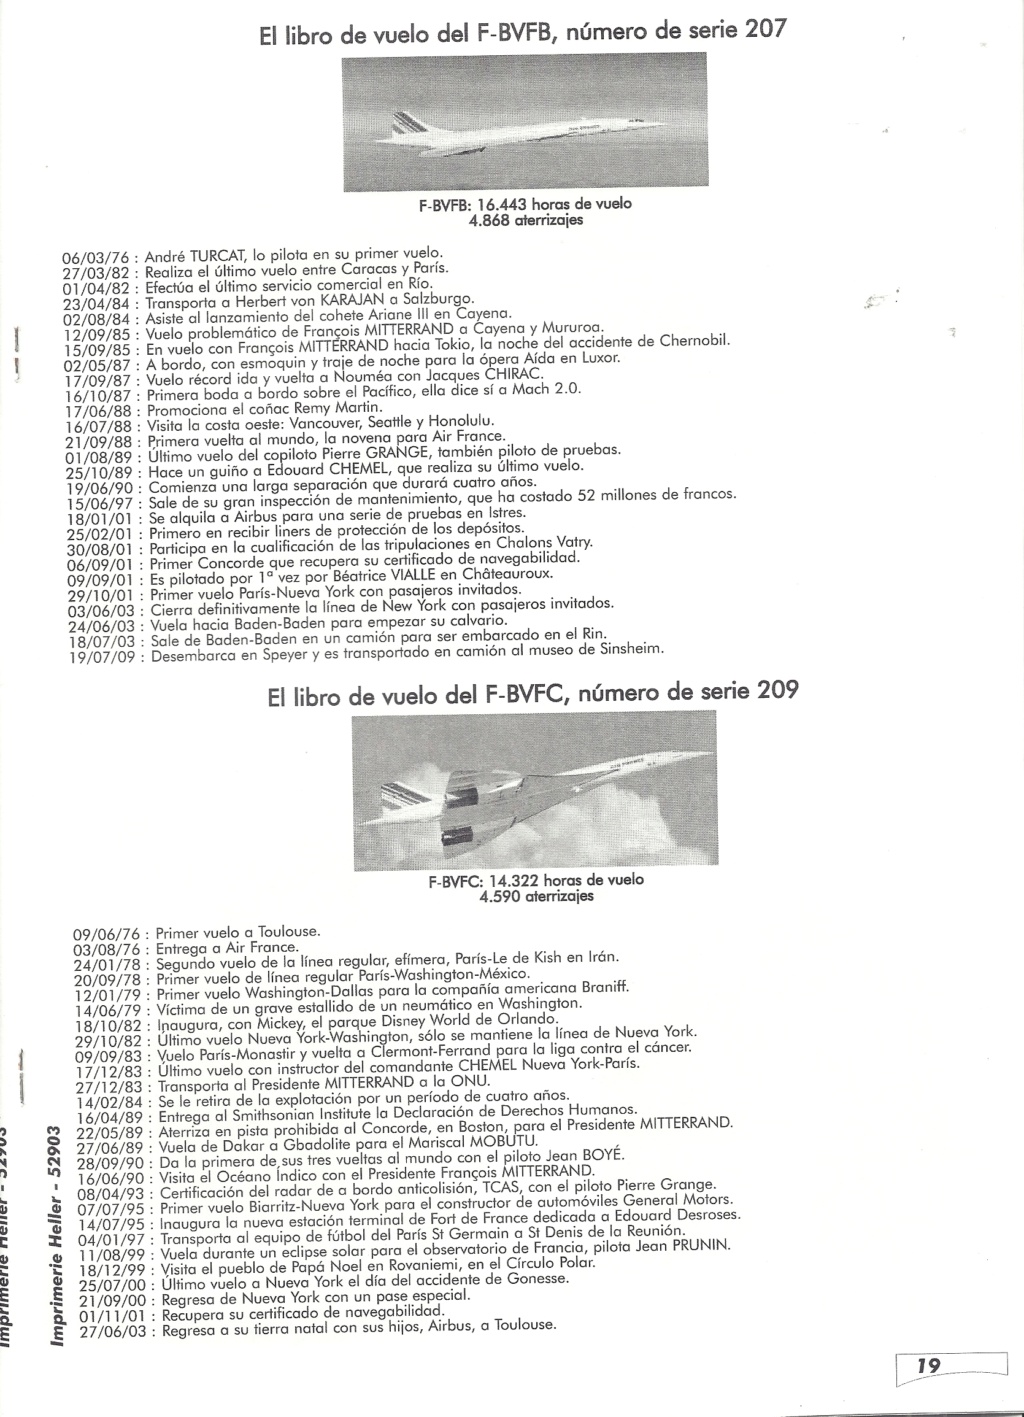 SUD AVIATION - BRITISH AIRCRAFT CORPORATION  CONCORDE 1/72ème Réf 52903 Notice Hell2269